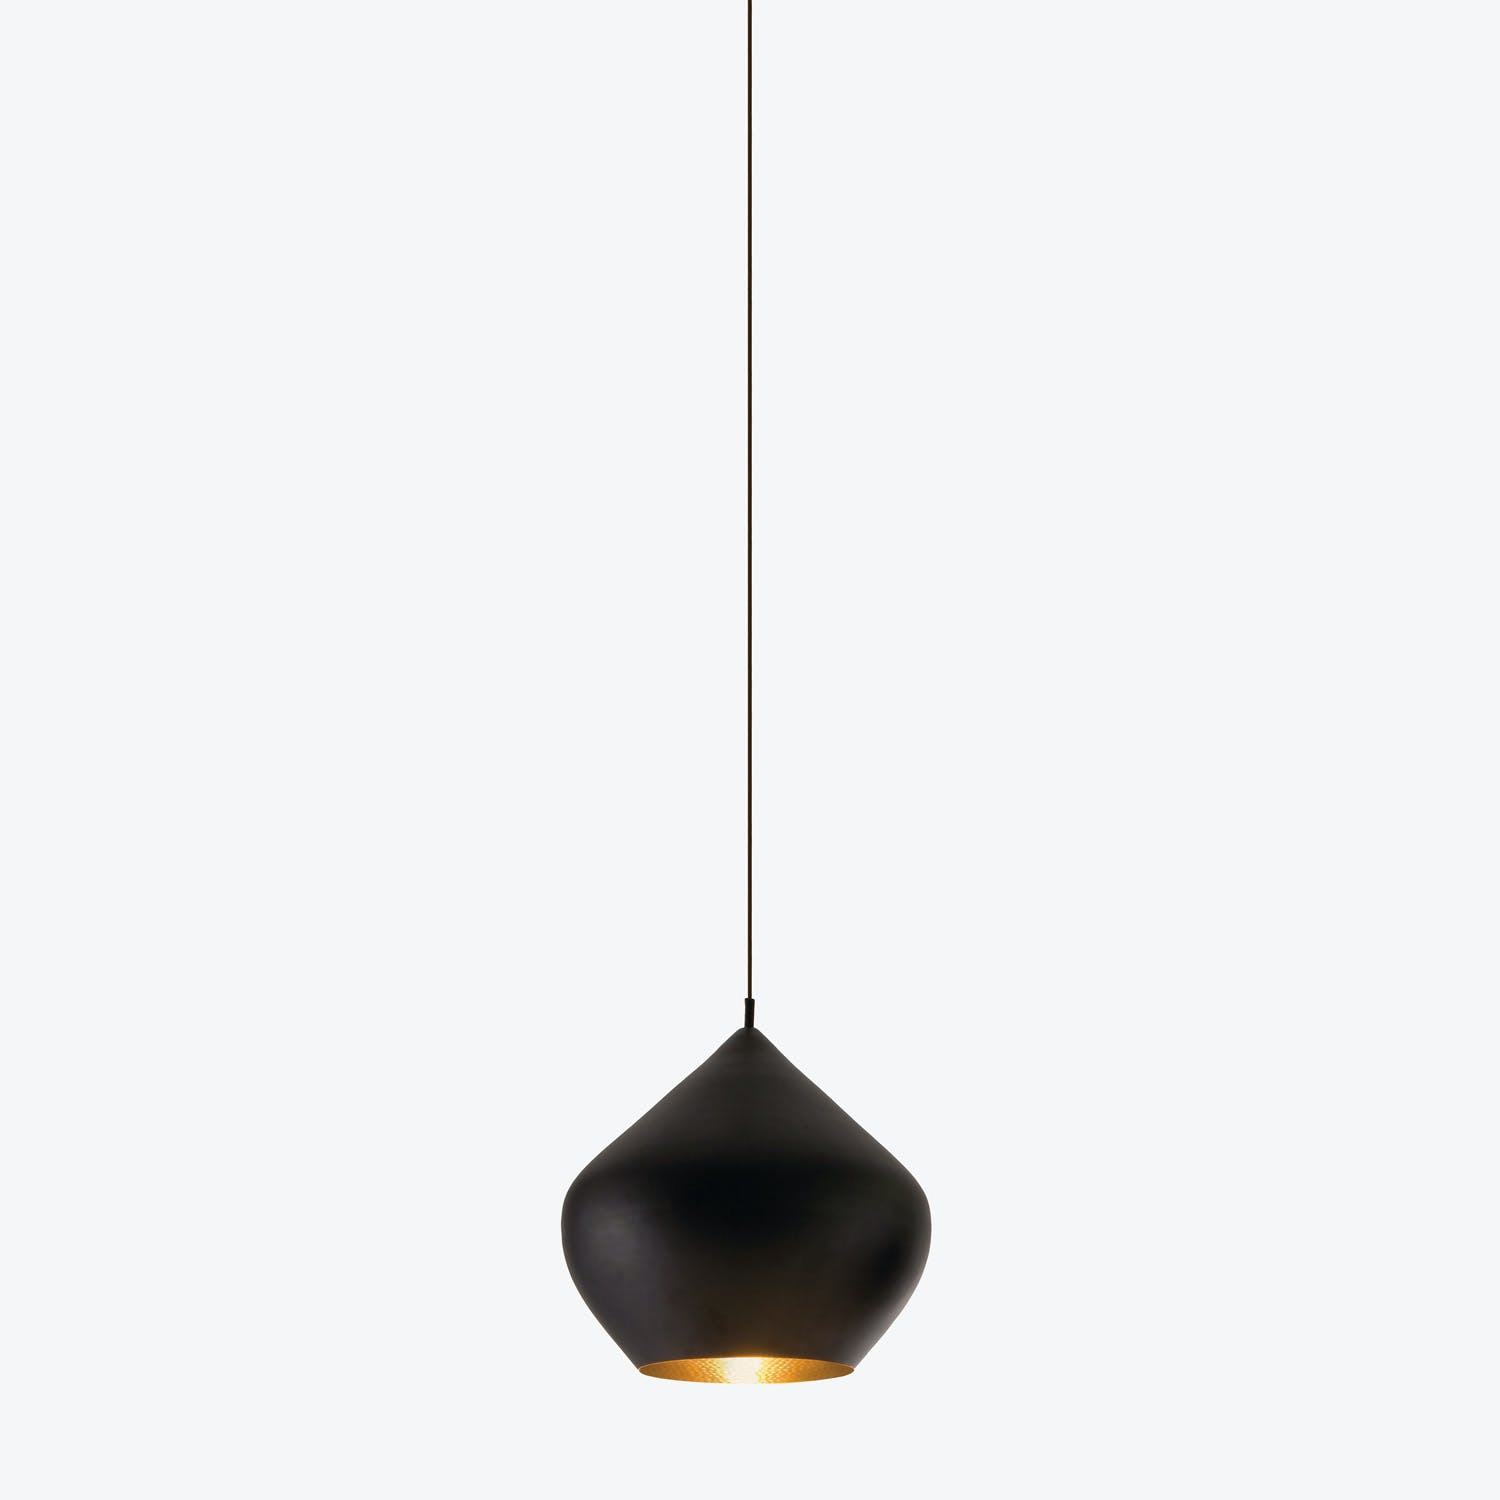 Contemporary pendant light with matte black finish emits warm glow.